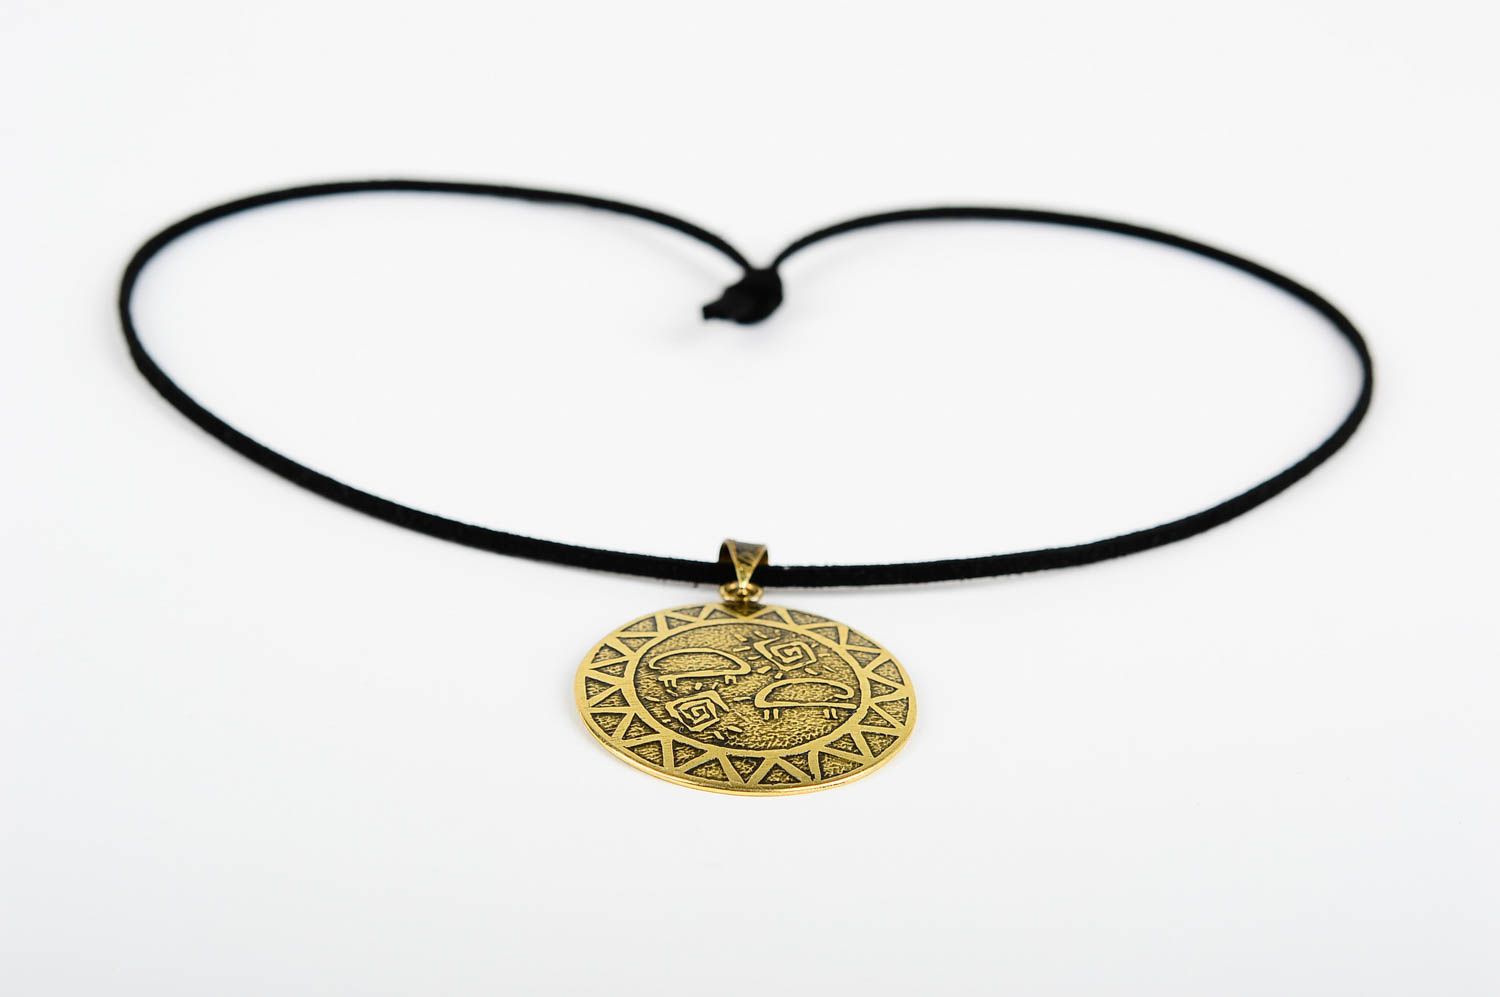 Handmade pendant metal jewelry designer accessory gift ideas unusual pendant photo 3